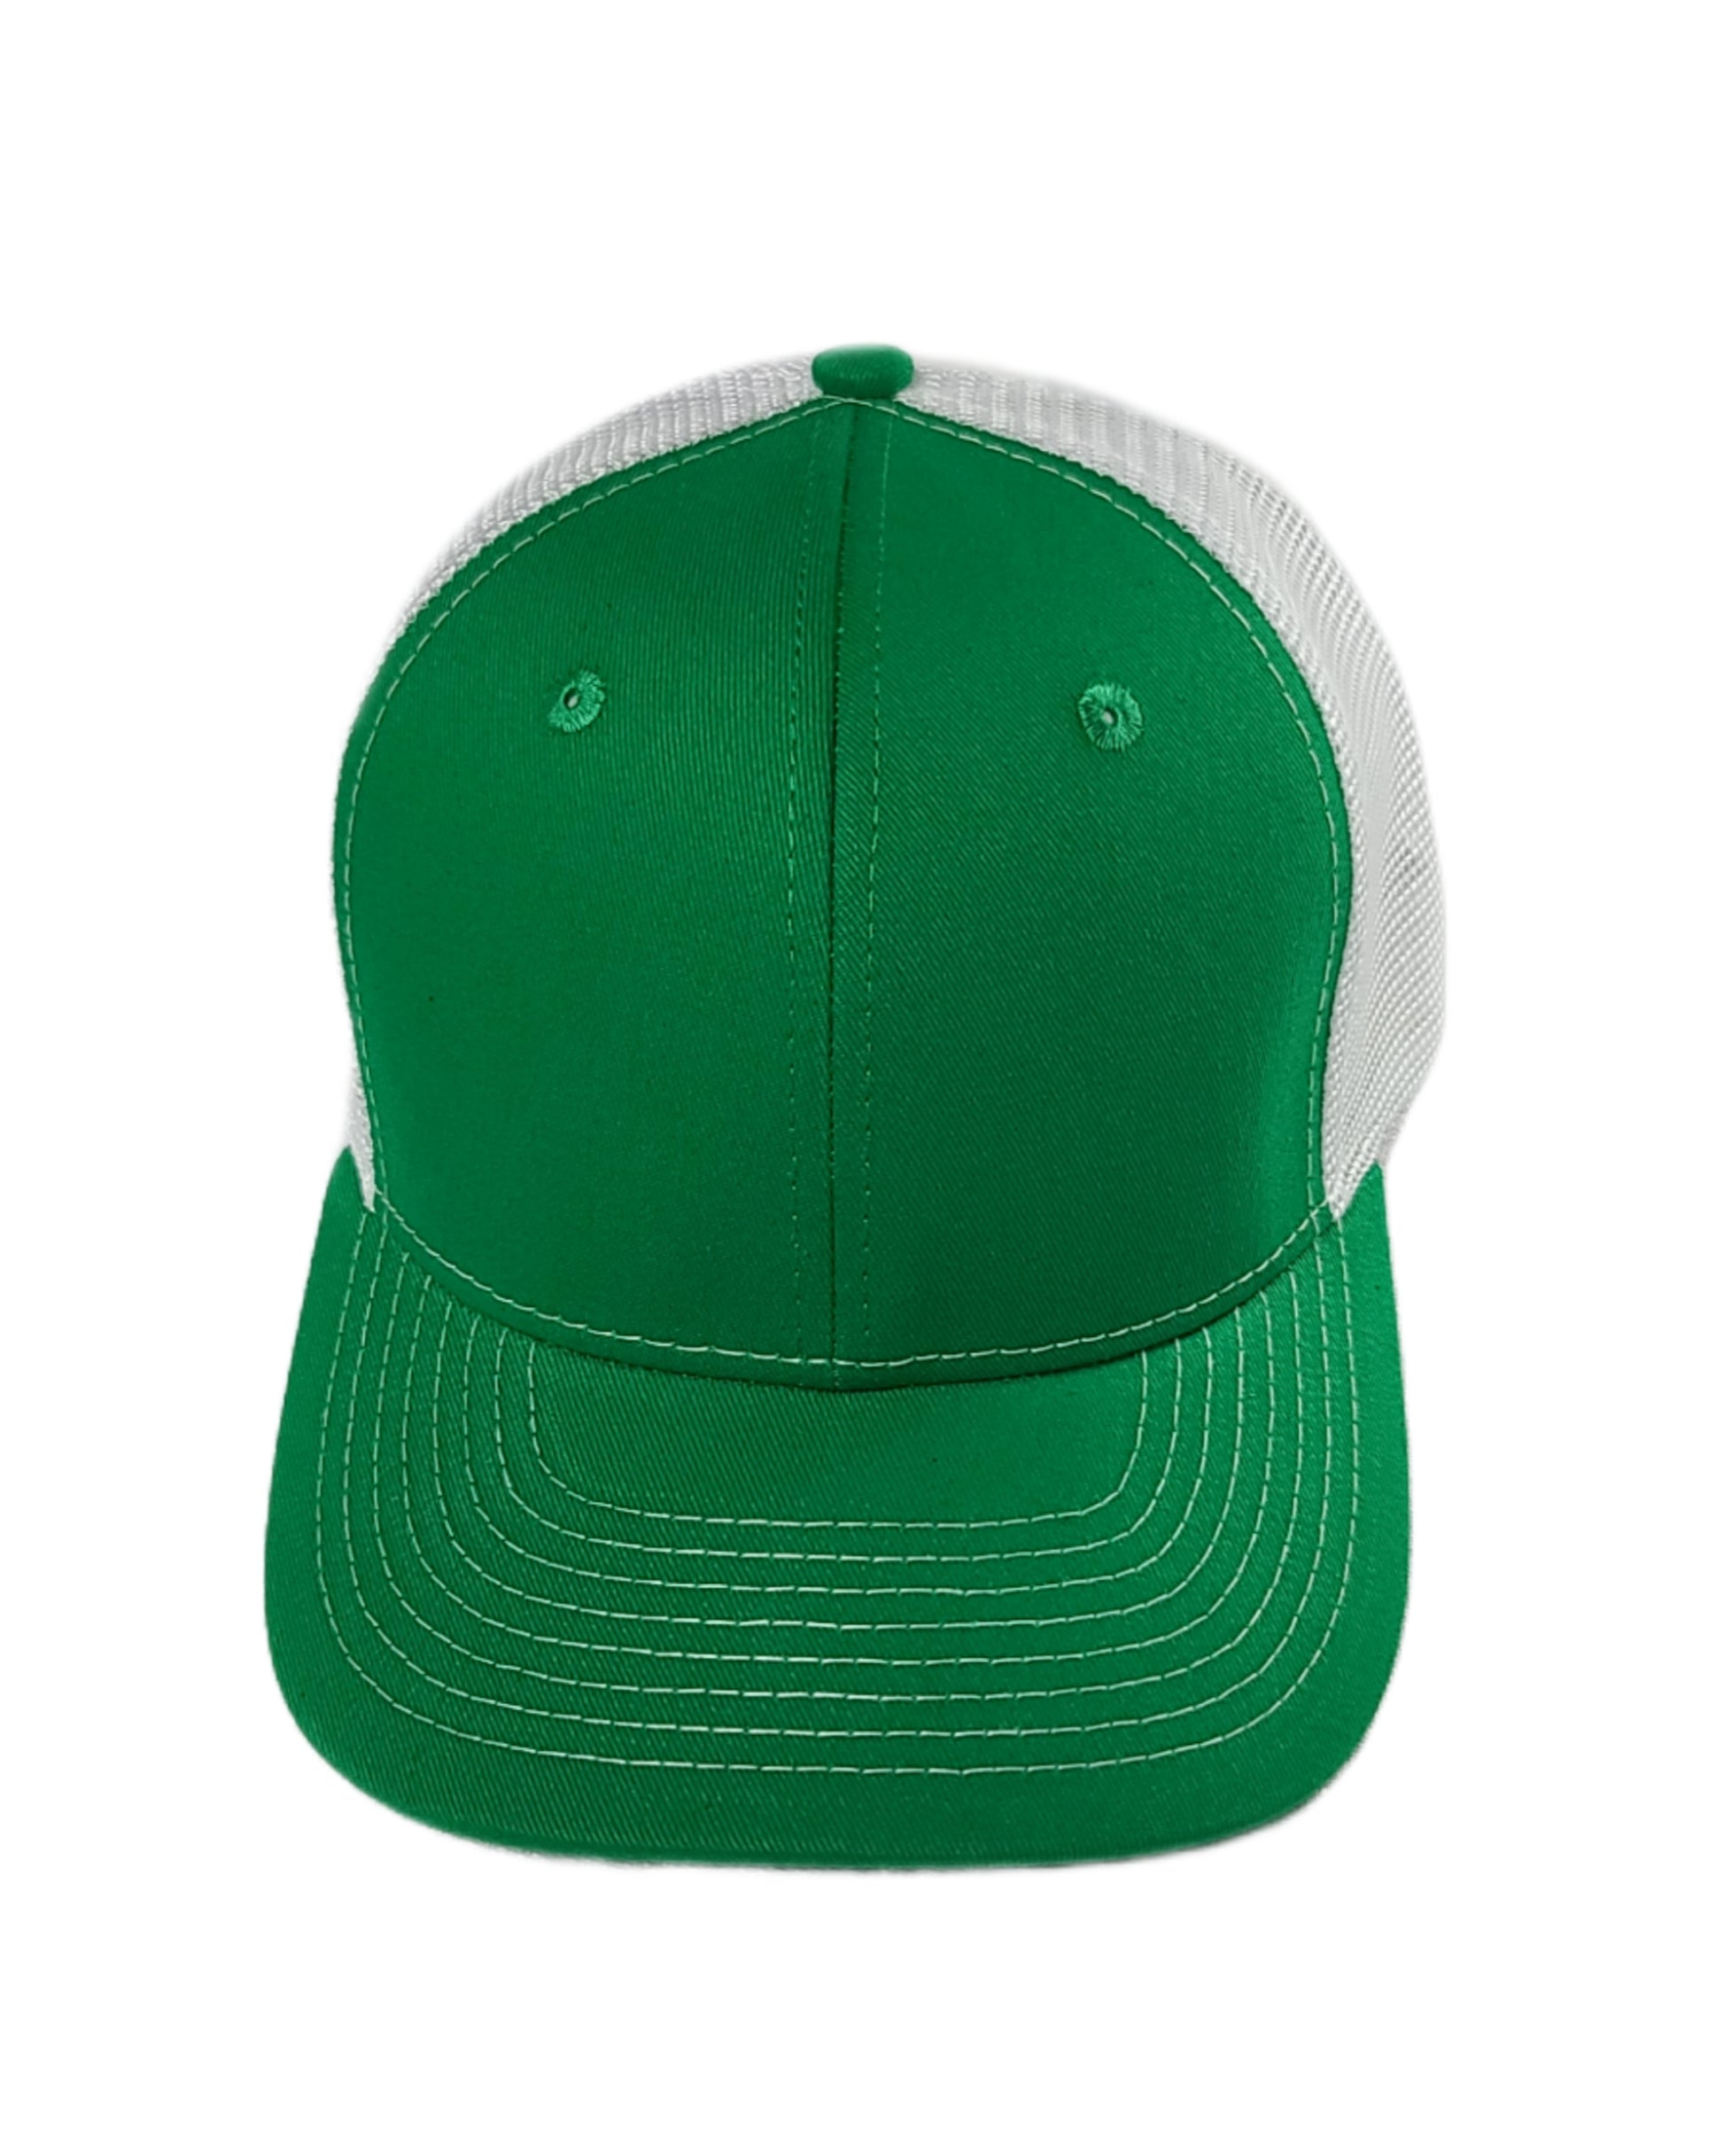 kelly green and white mesh trucker hat blank caps Calitrendz